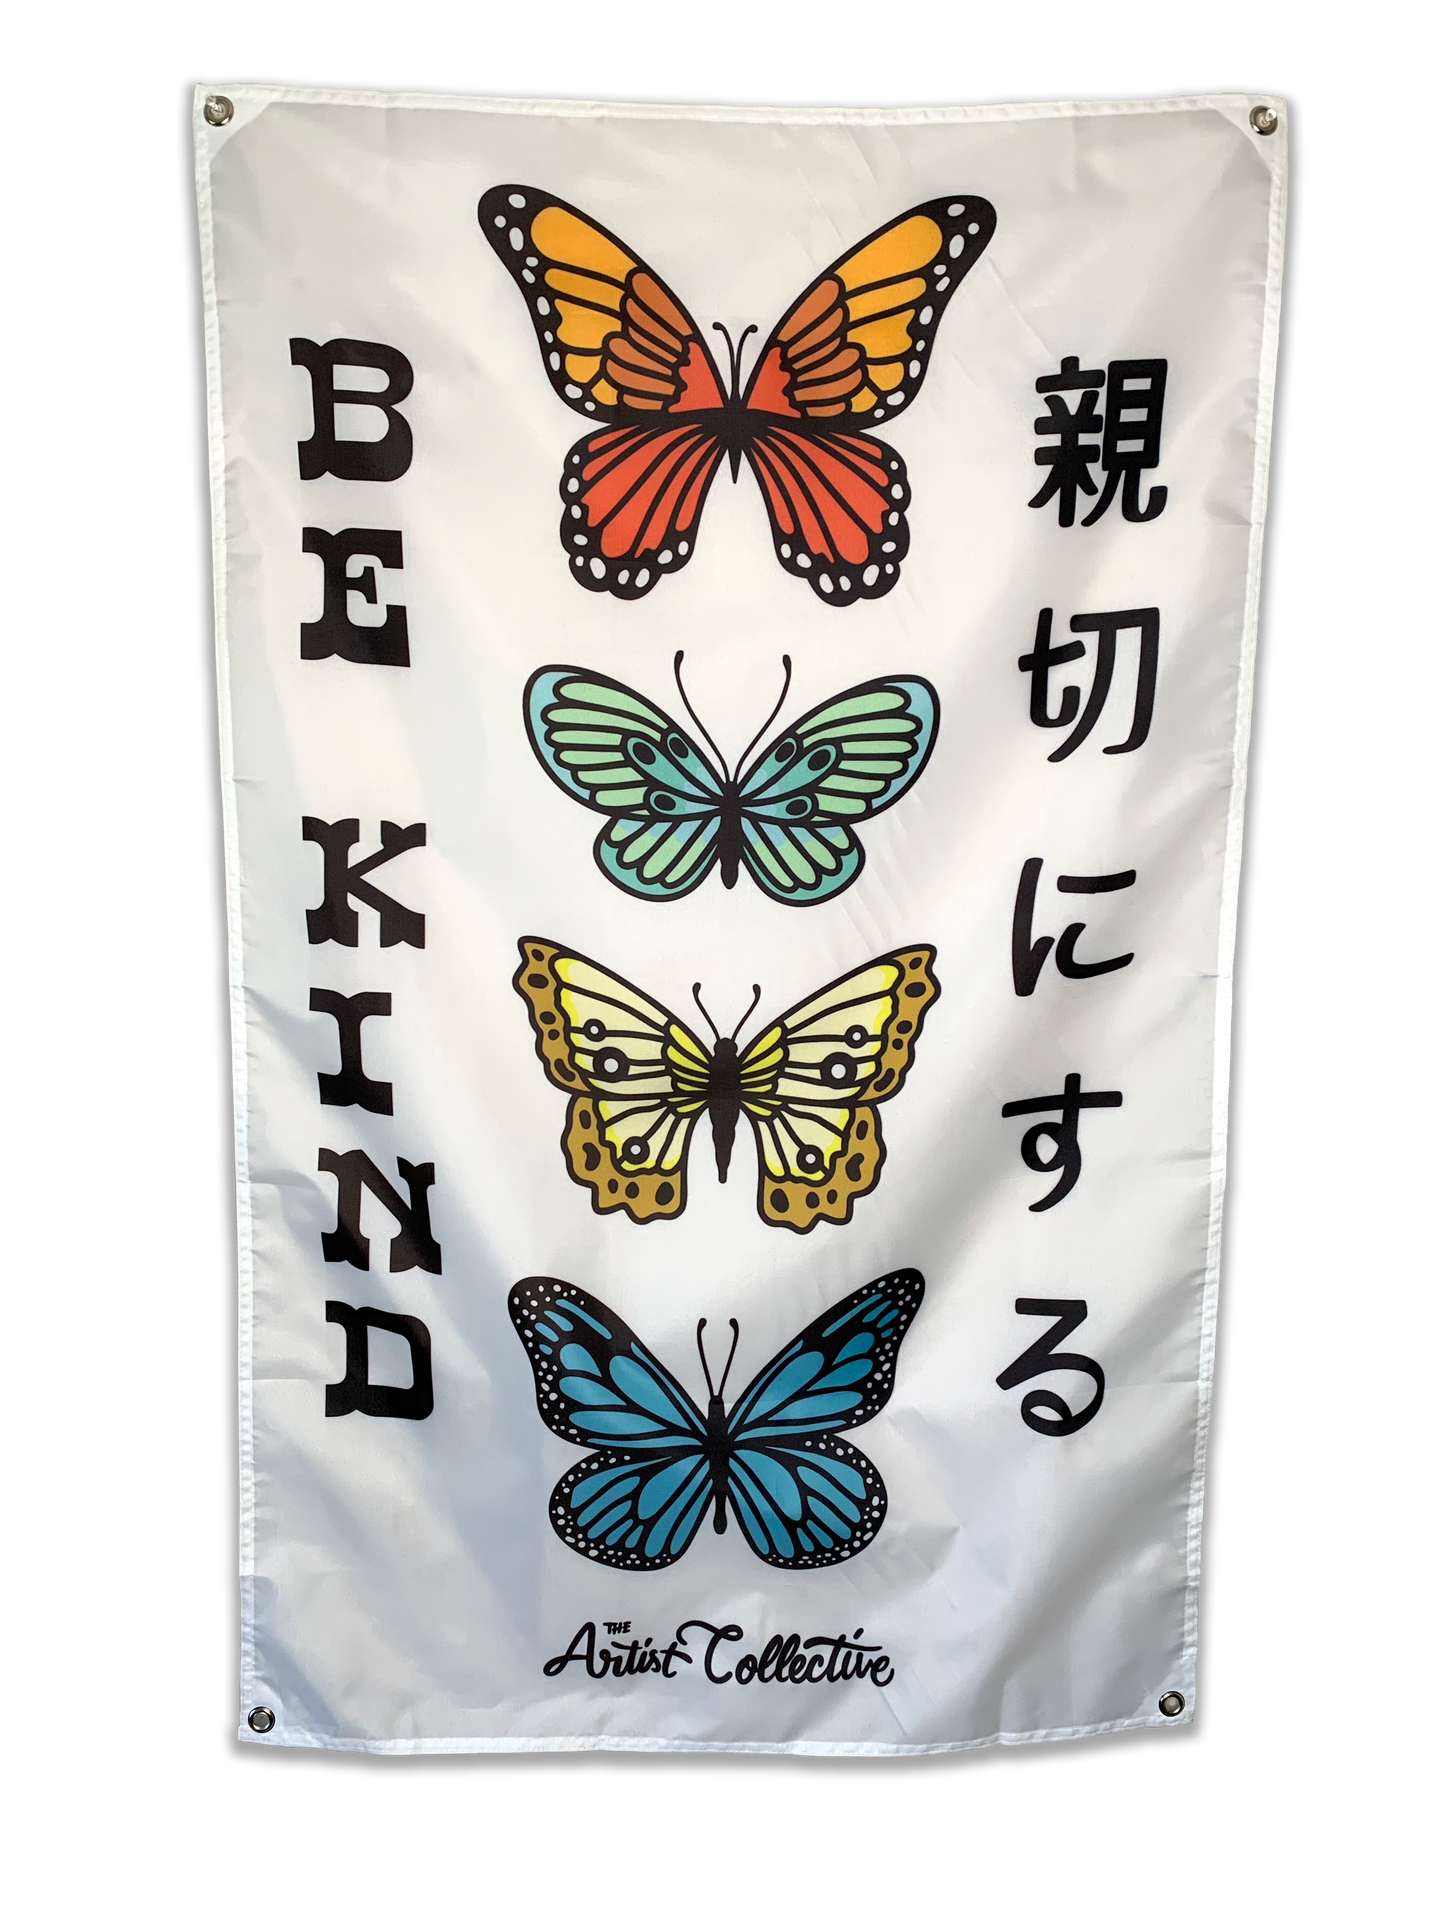 Be Kind Banner